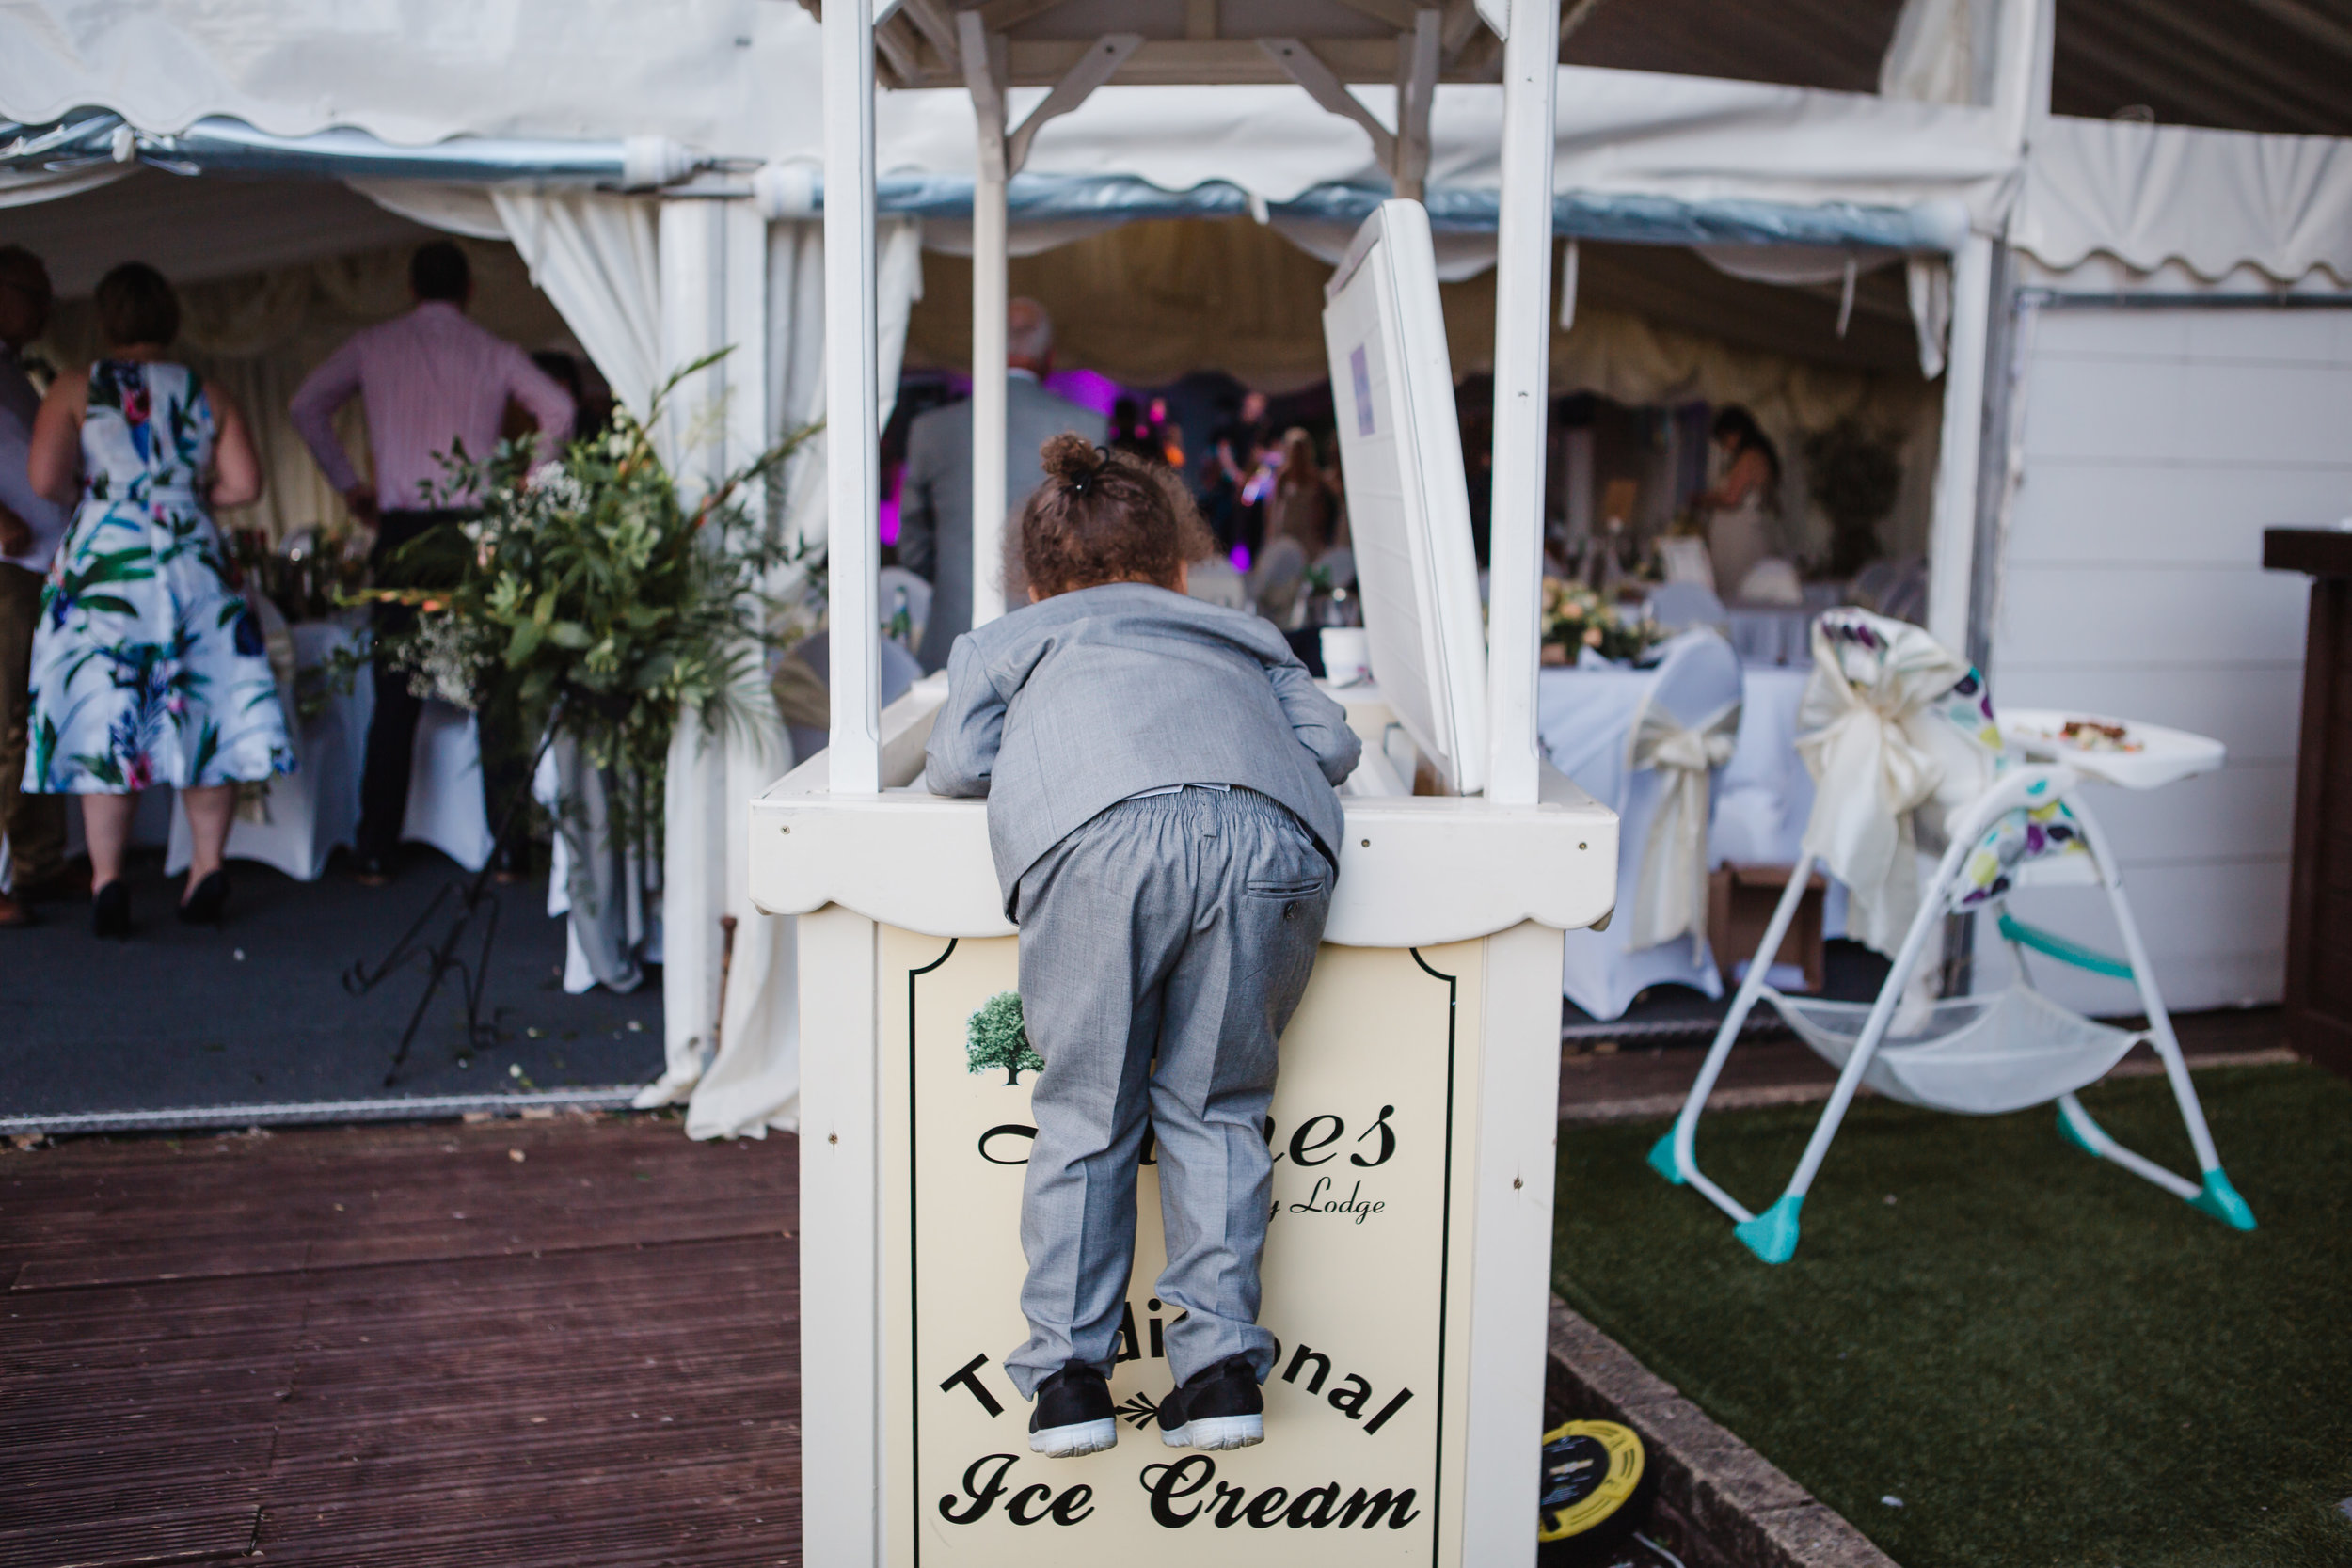  a child climbs into an ice cream freezer at a wedding